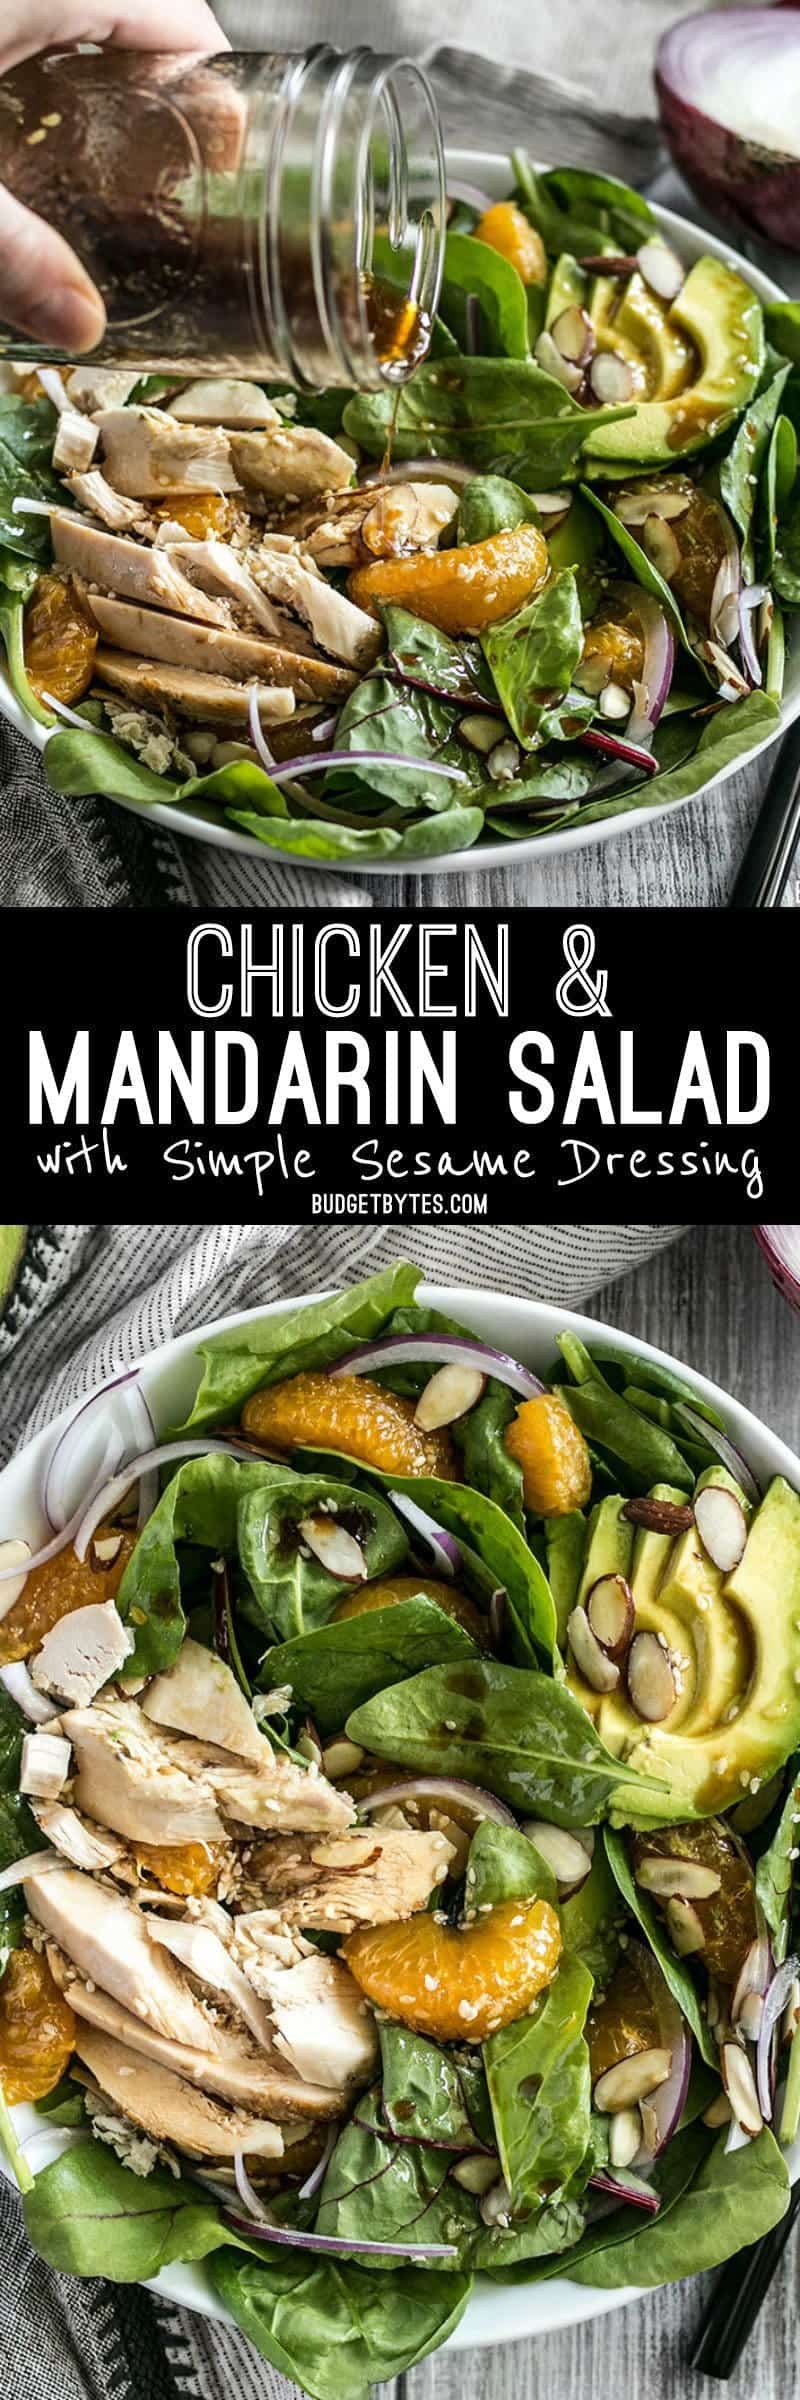 This meal-worthy Chicken and Mandarin Salad boasts sweet mandarin oranges, creamy avocado, crunchy almonds, and homemade sesame dressing. BudgetBytes.com